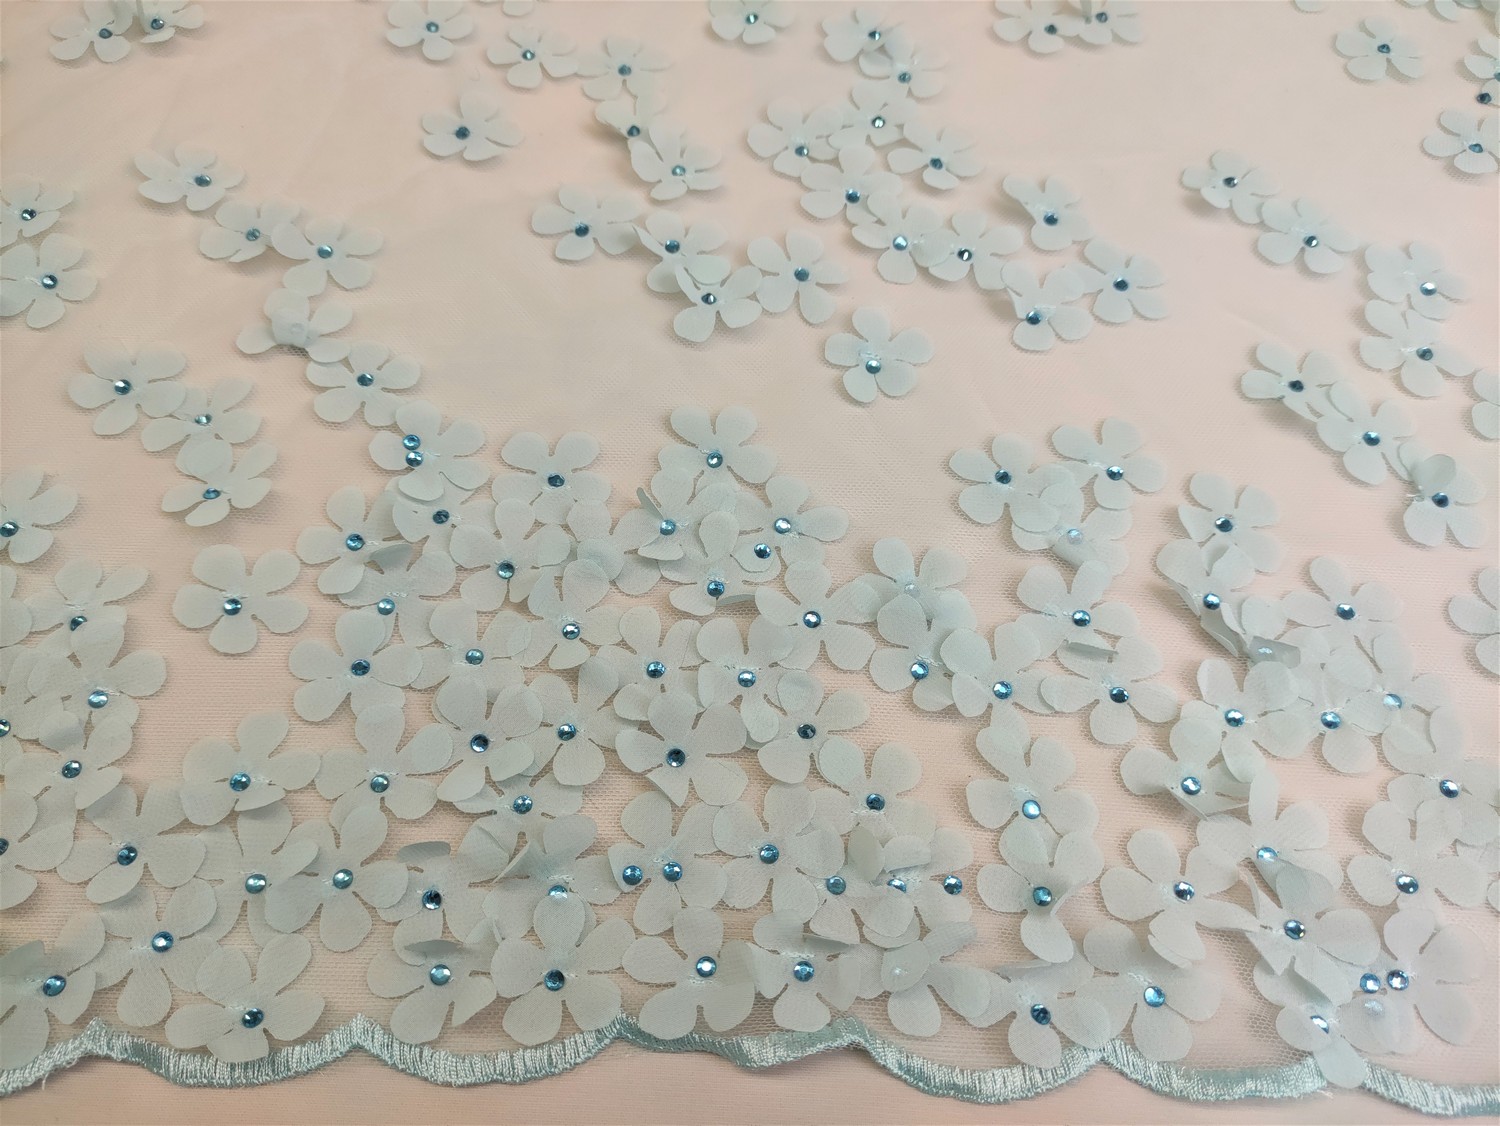 Tessuto Tulle mano seta ricamato con fiori in 3D e con strass celeste  pastello - Iaia Tessuti